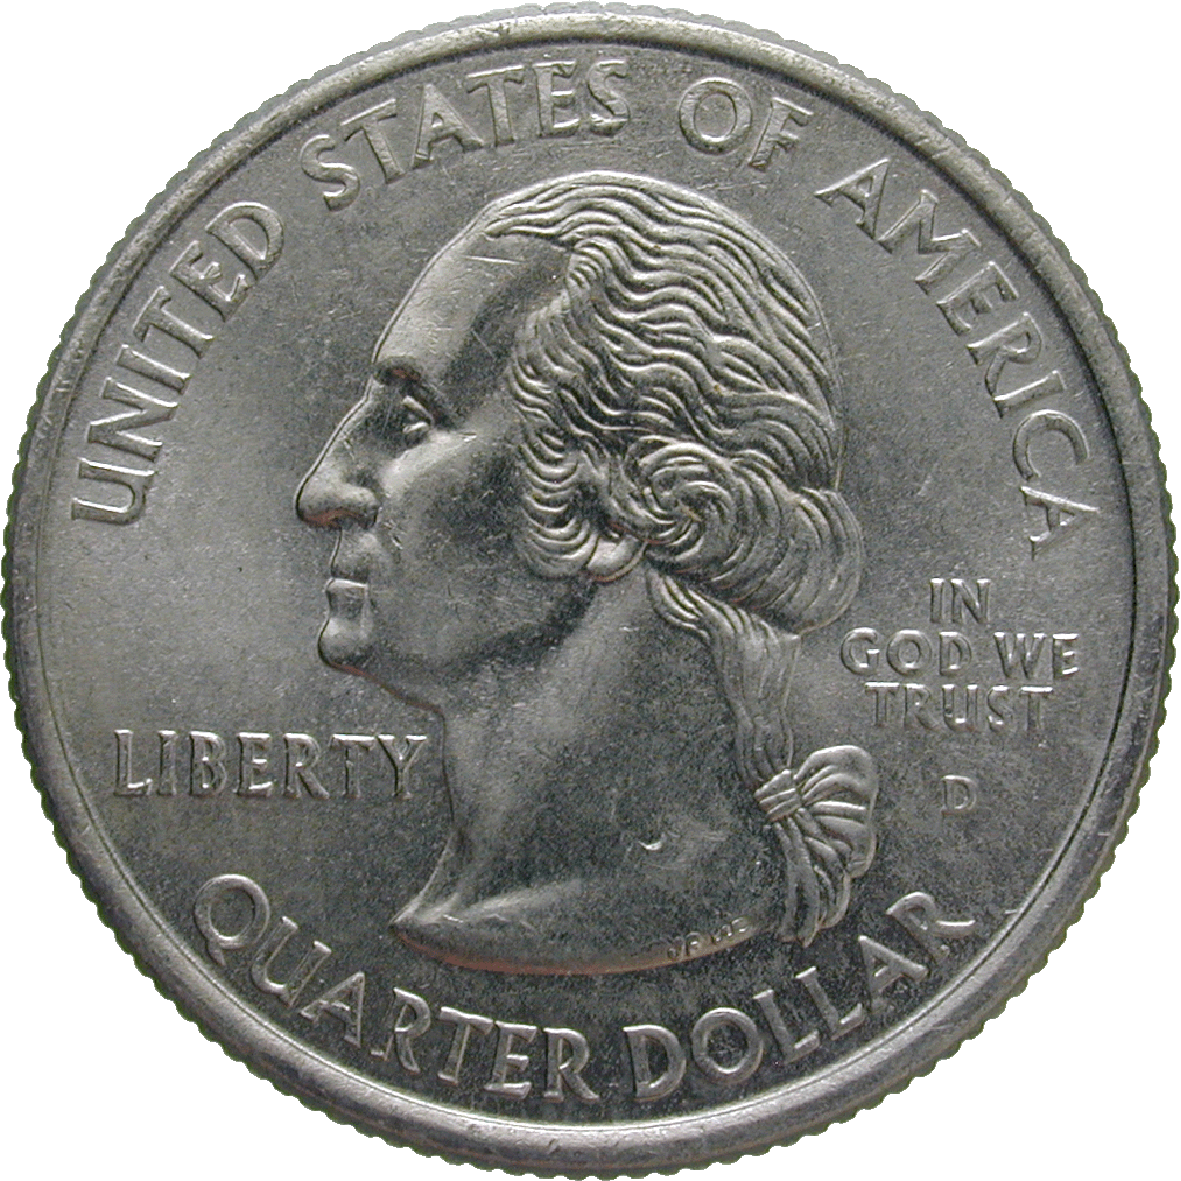 United States of America, Quarter Dollar 2000 (obverse)